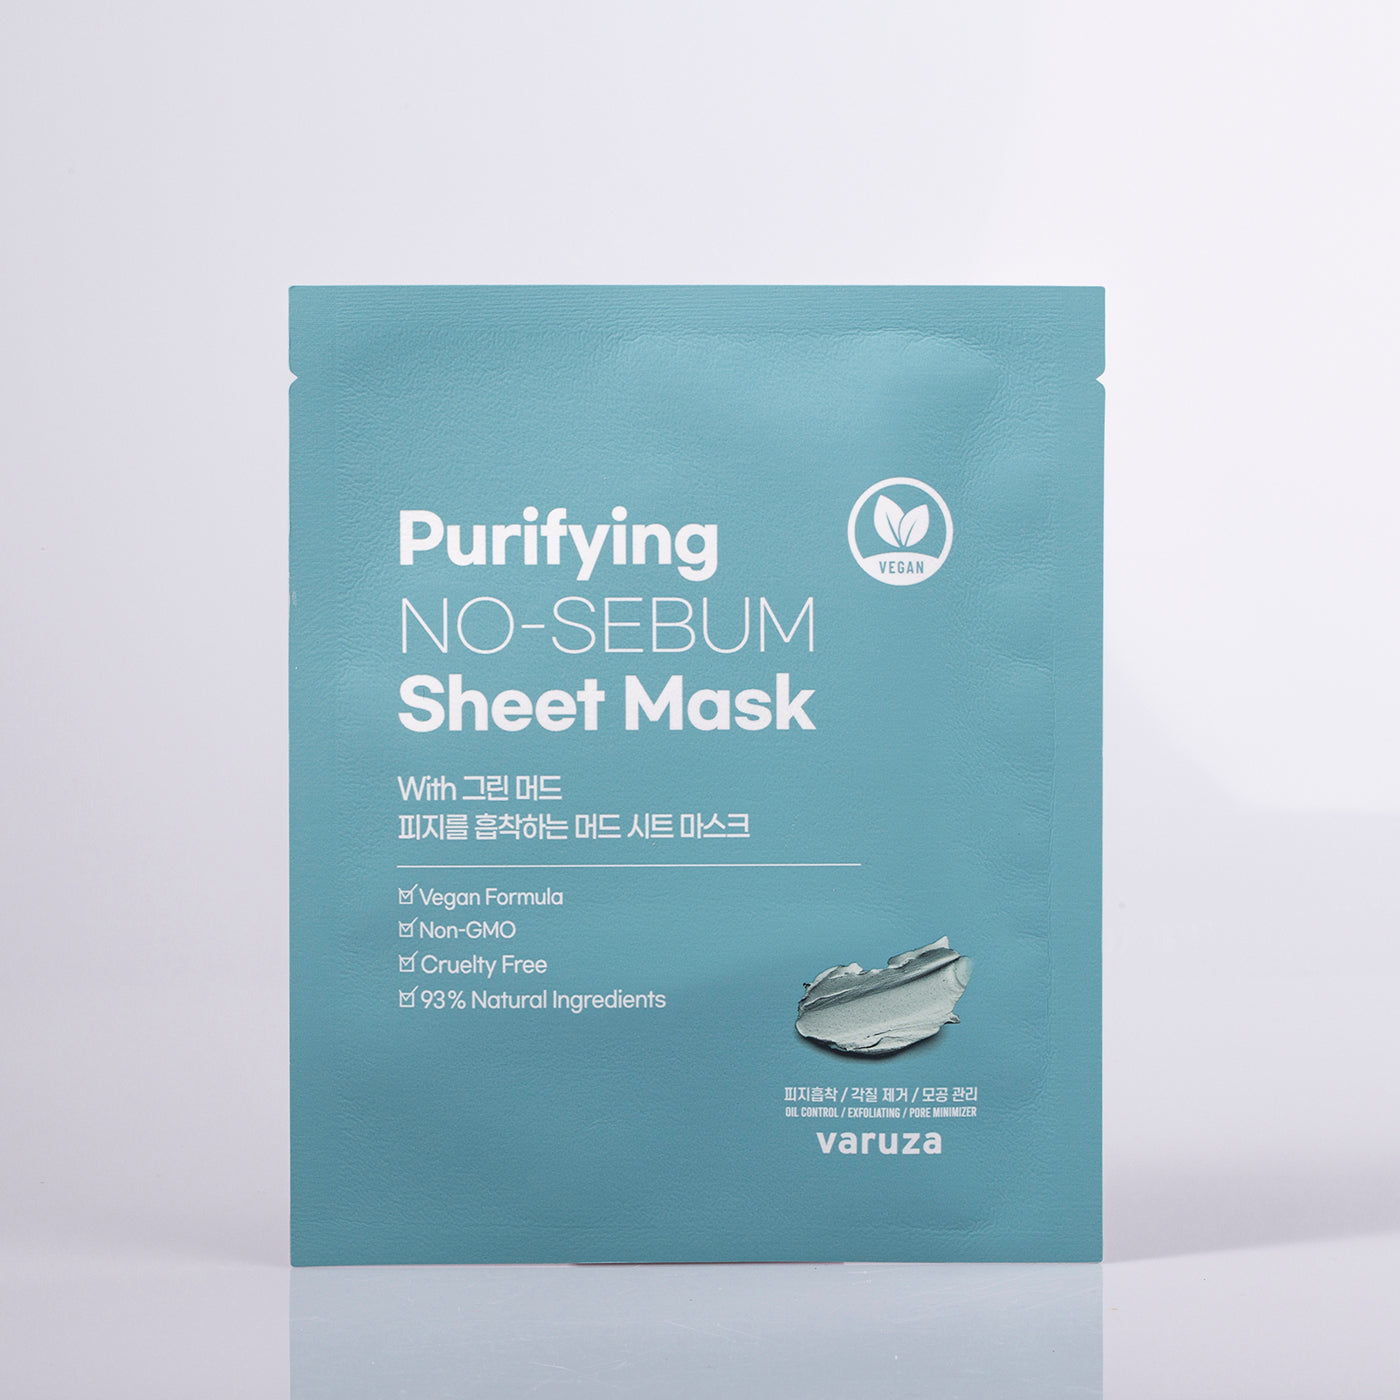 Purifying NO-SEBUM Sheet Mask with Green Mud